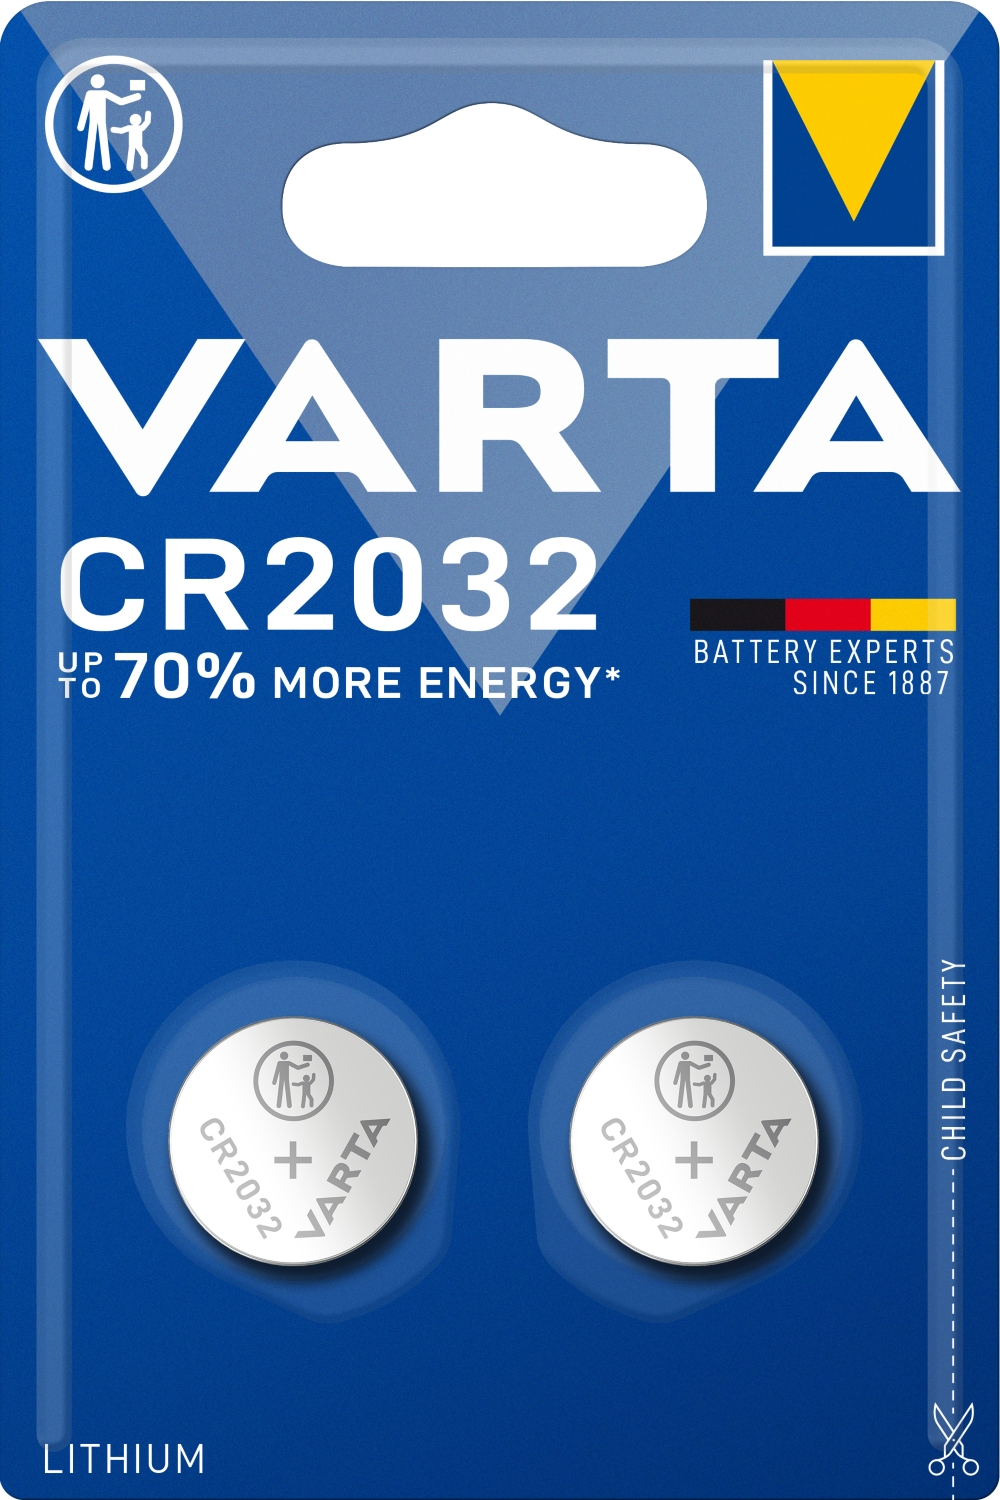 Piles bouton lithium CR2032 (x2) Varta